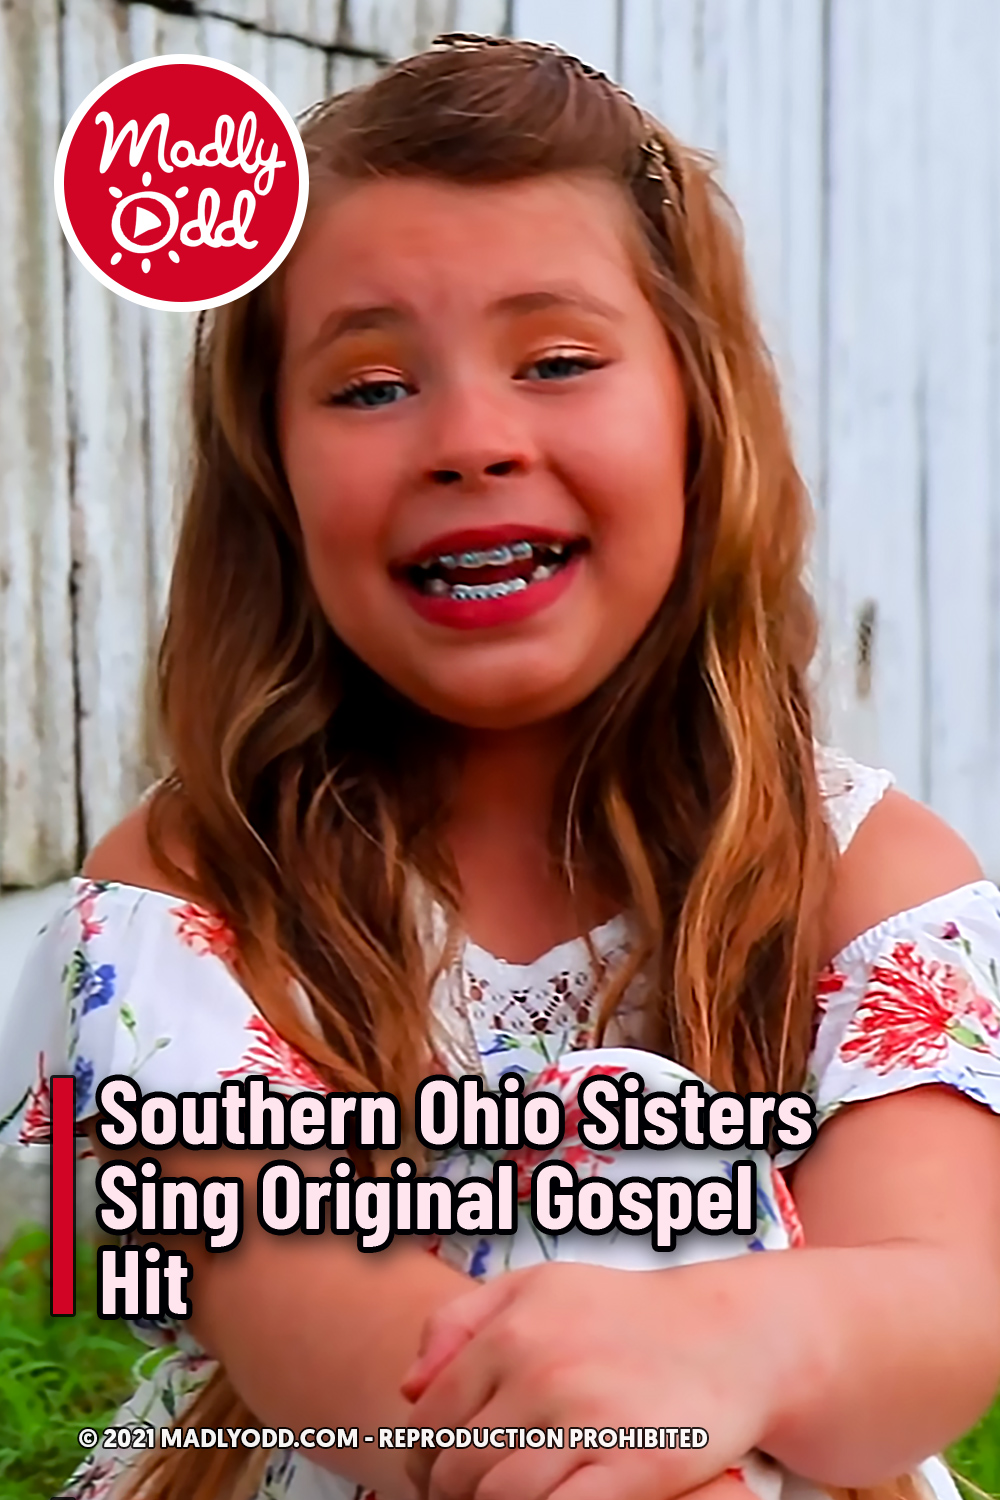 Southern Ohio Sisters Sing Original Gospel Hit